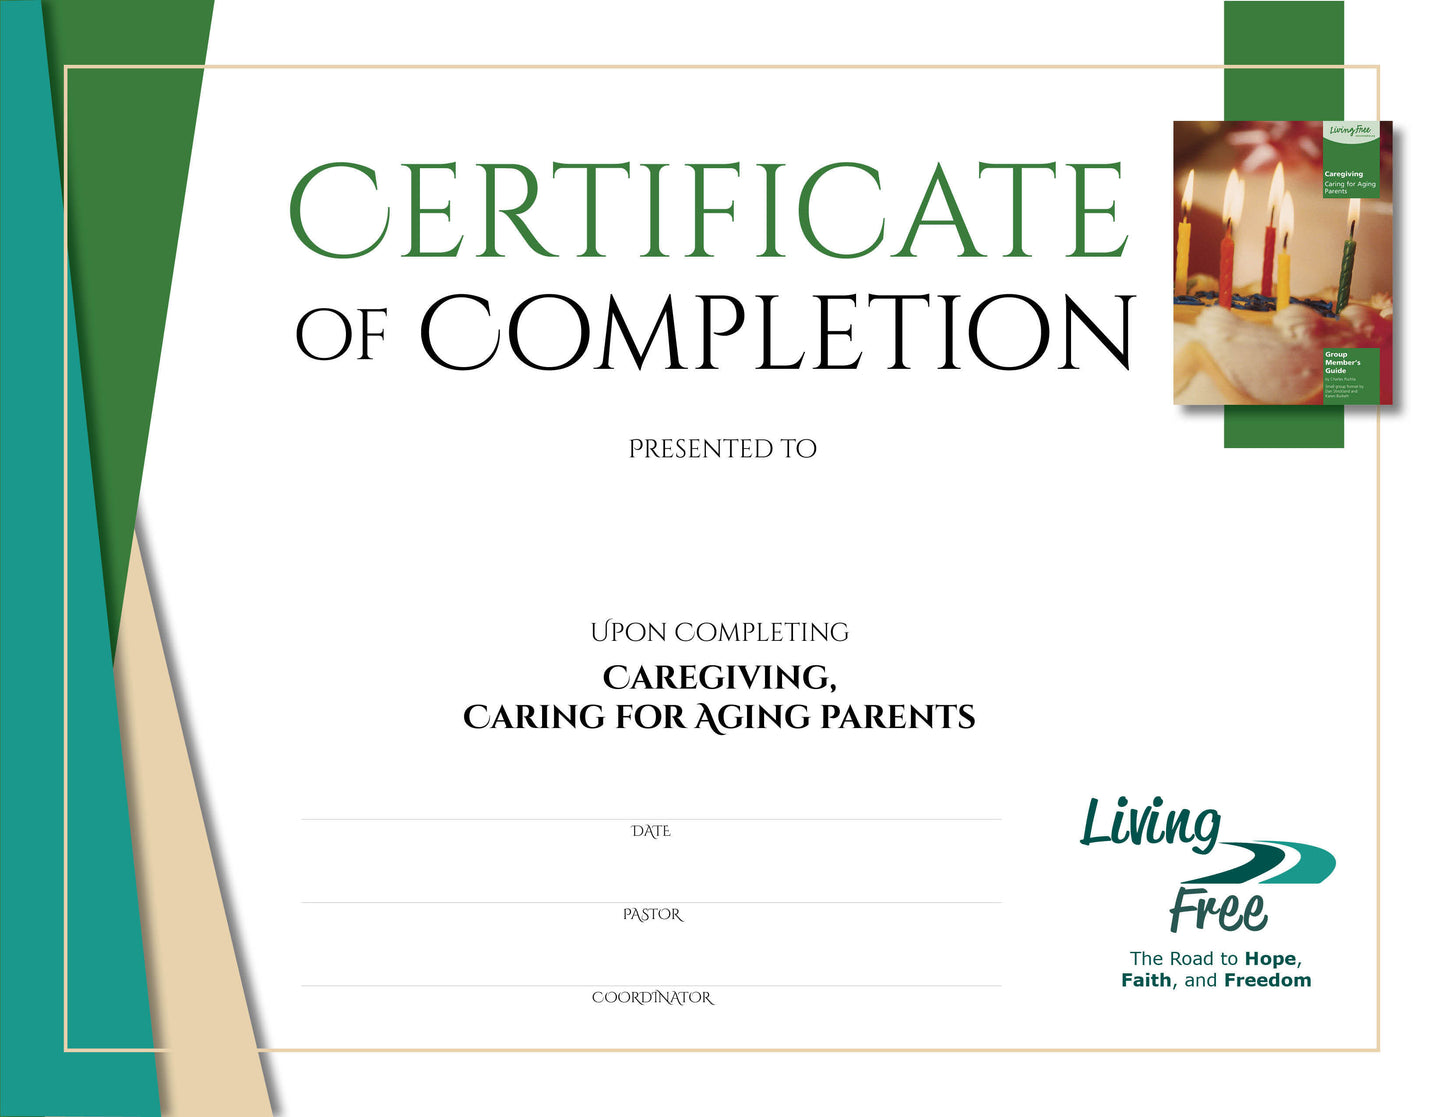 Caregiving: Digital Certificate